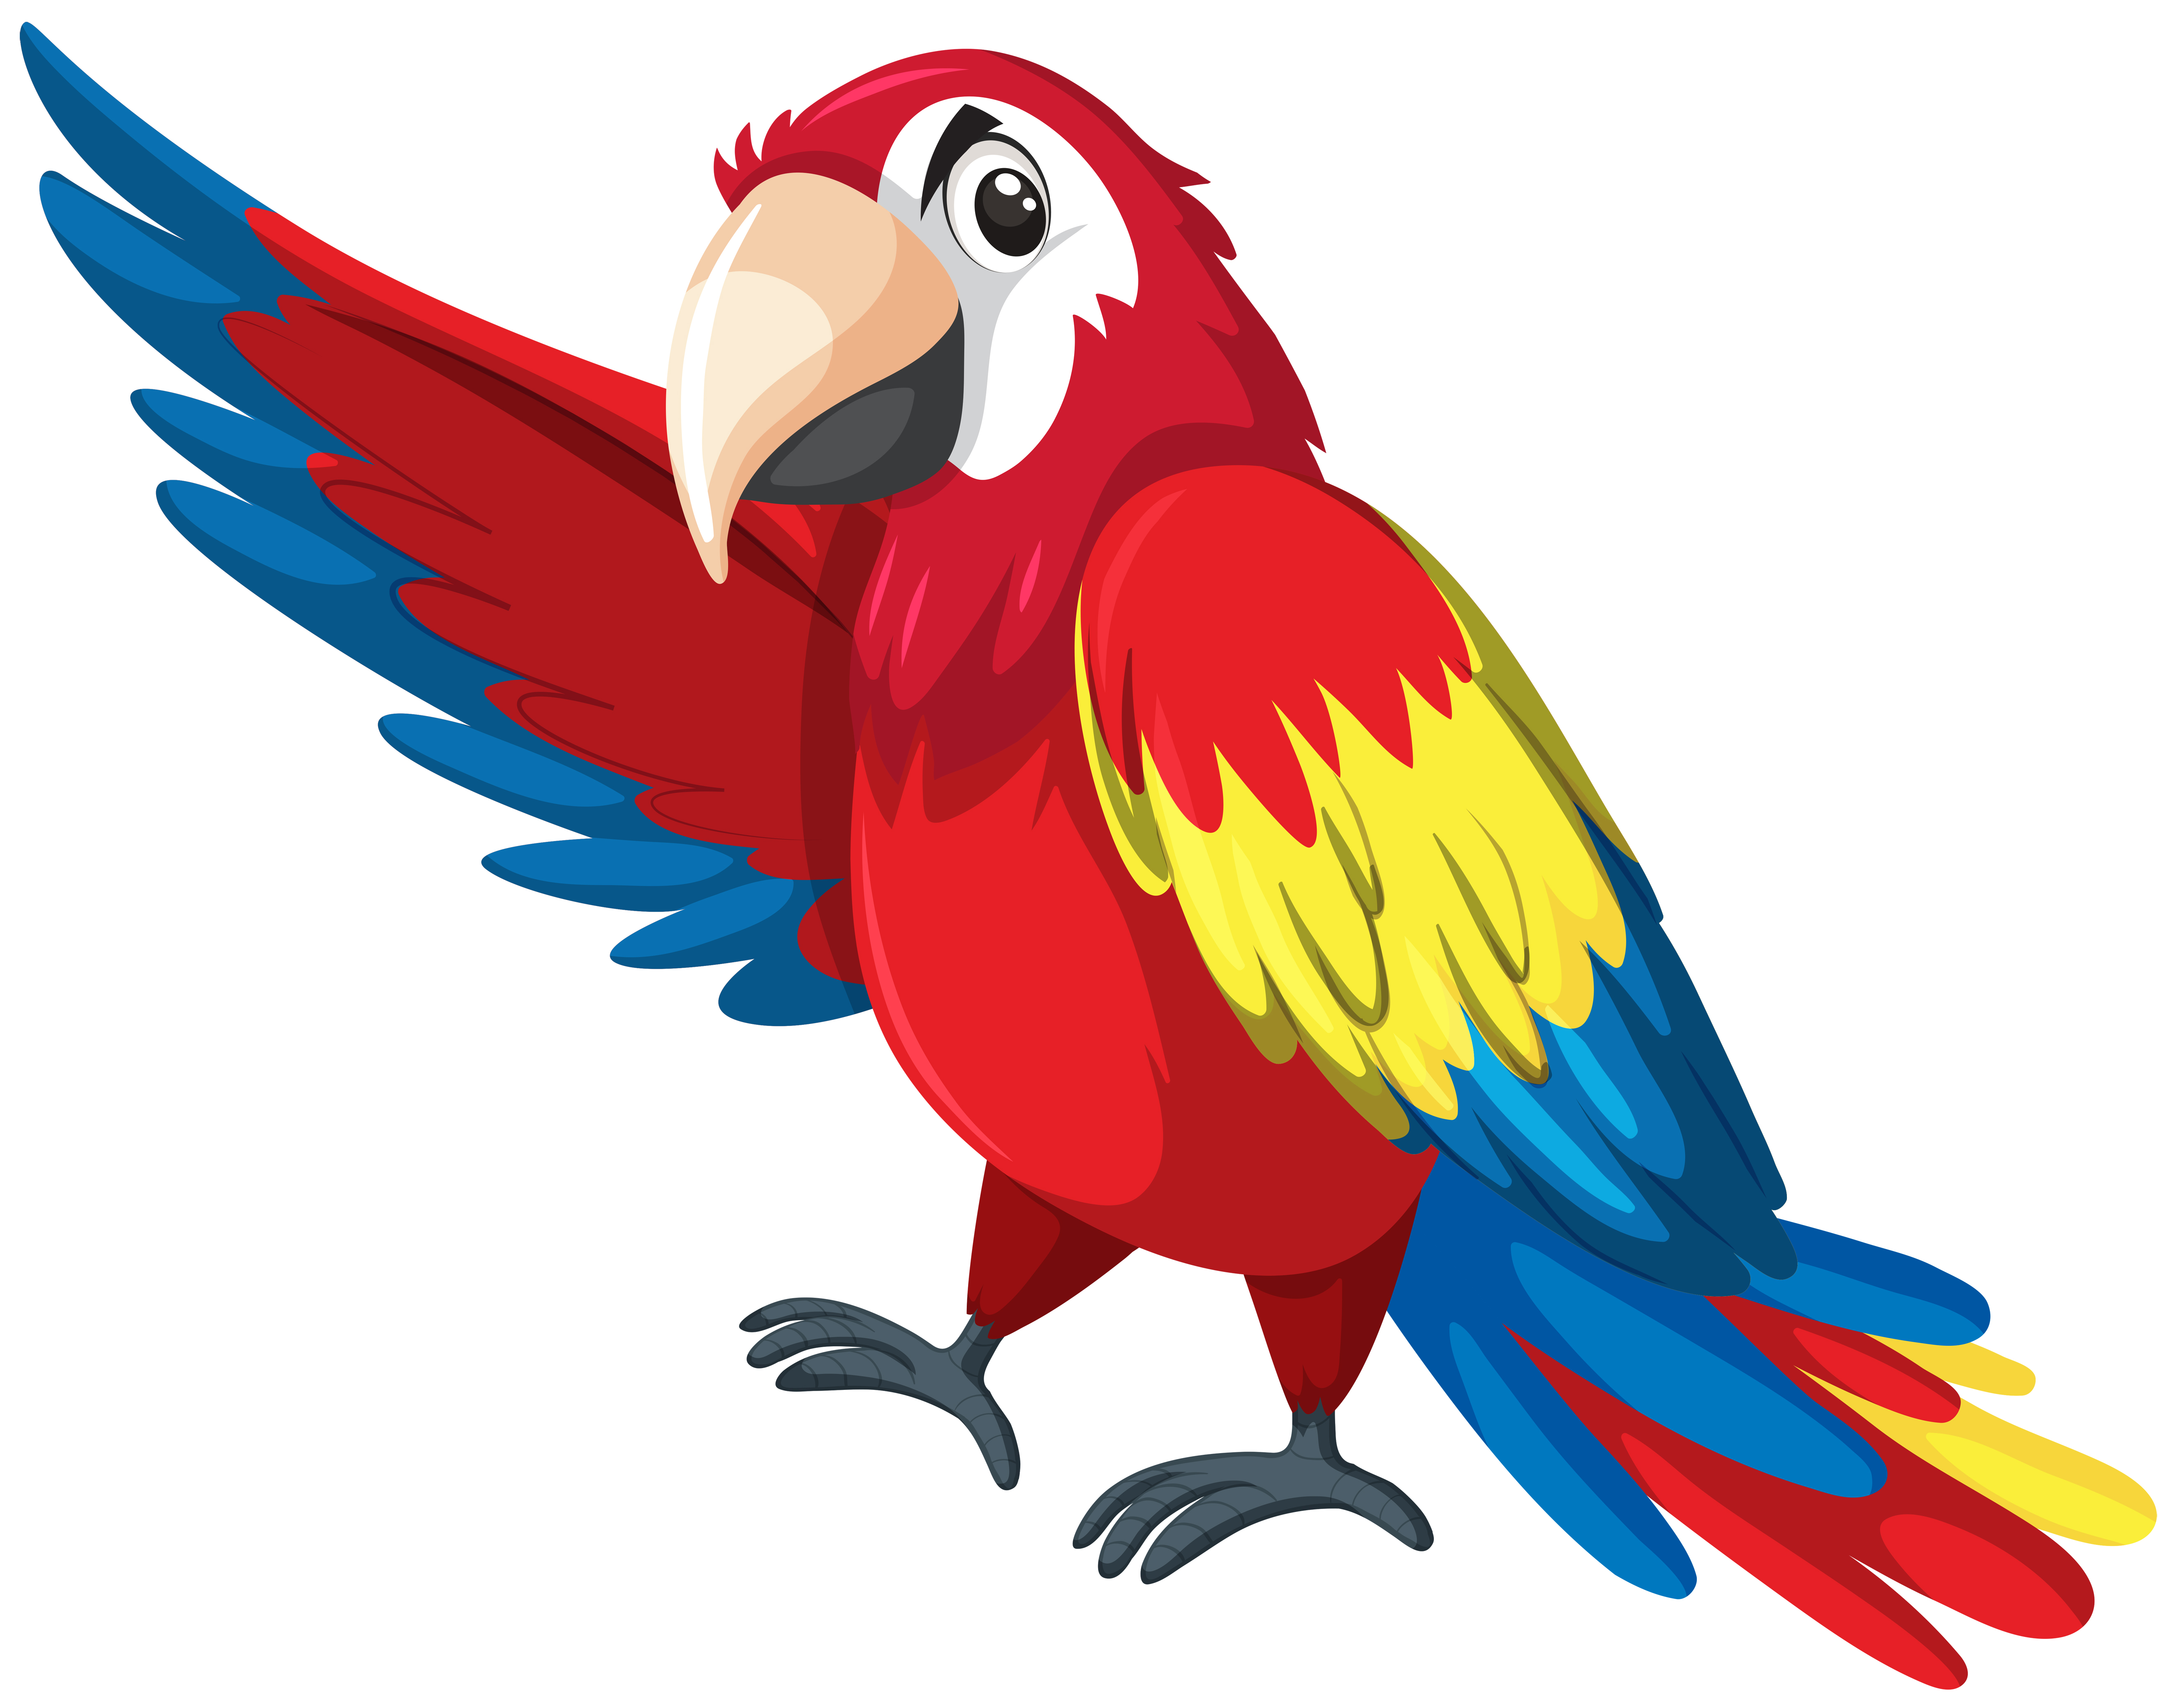 A colourful parrot character 614006 Download Free Vectors Clipart Graphics & Vector Art